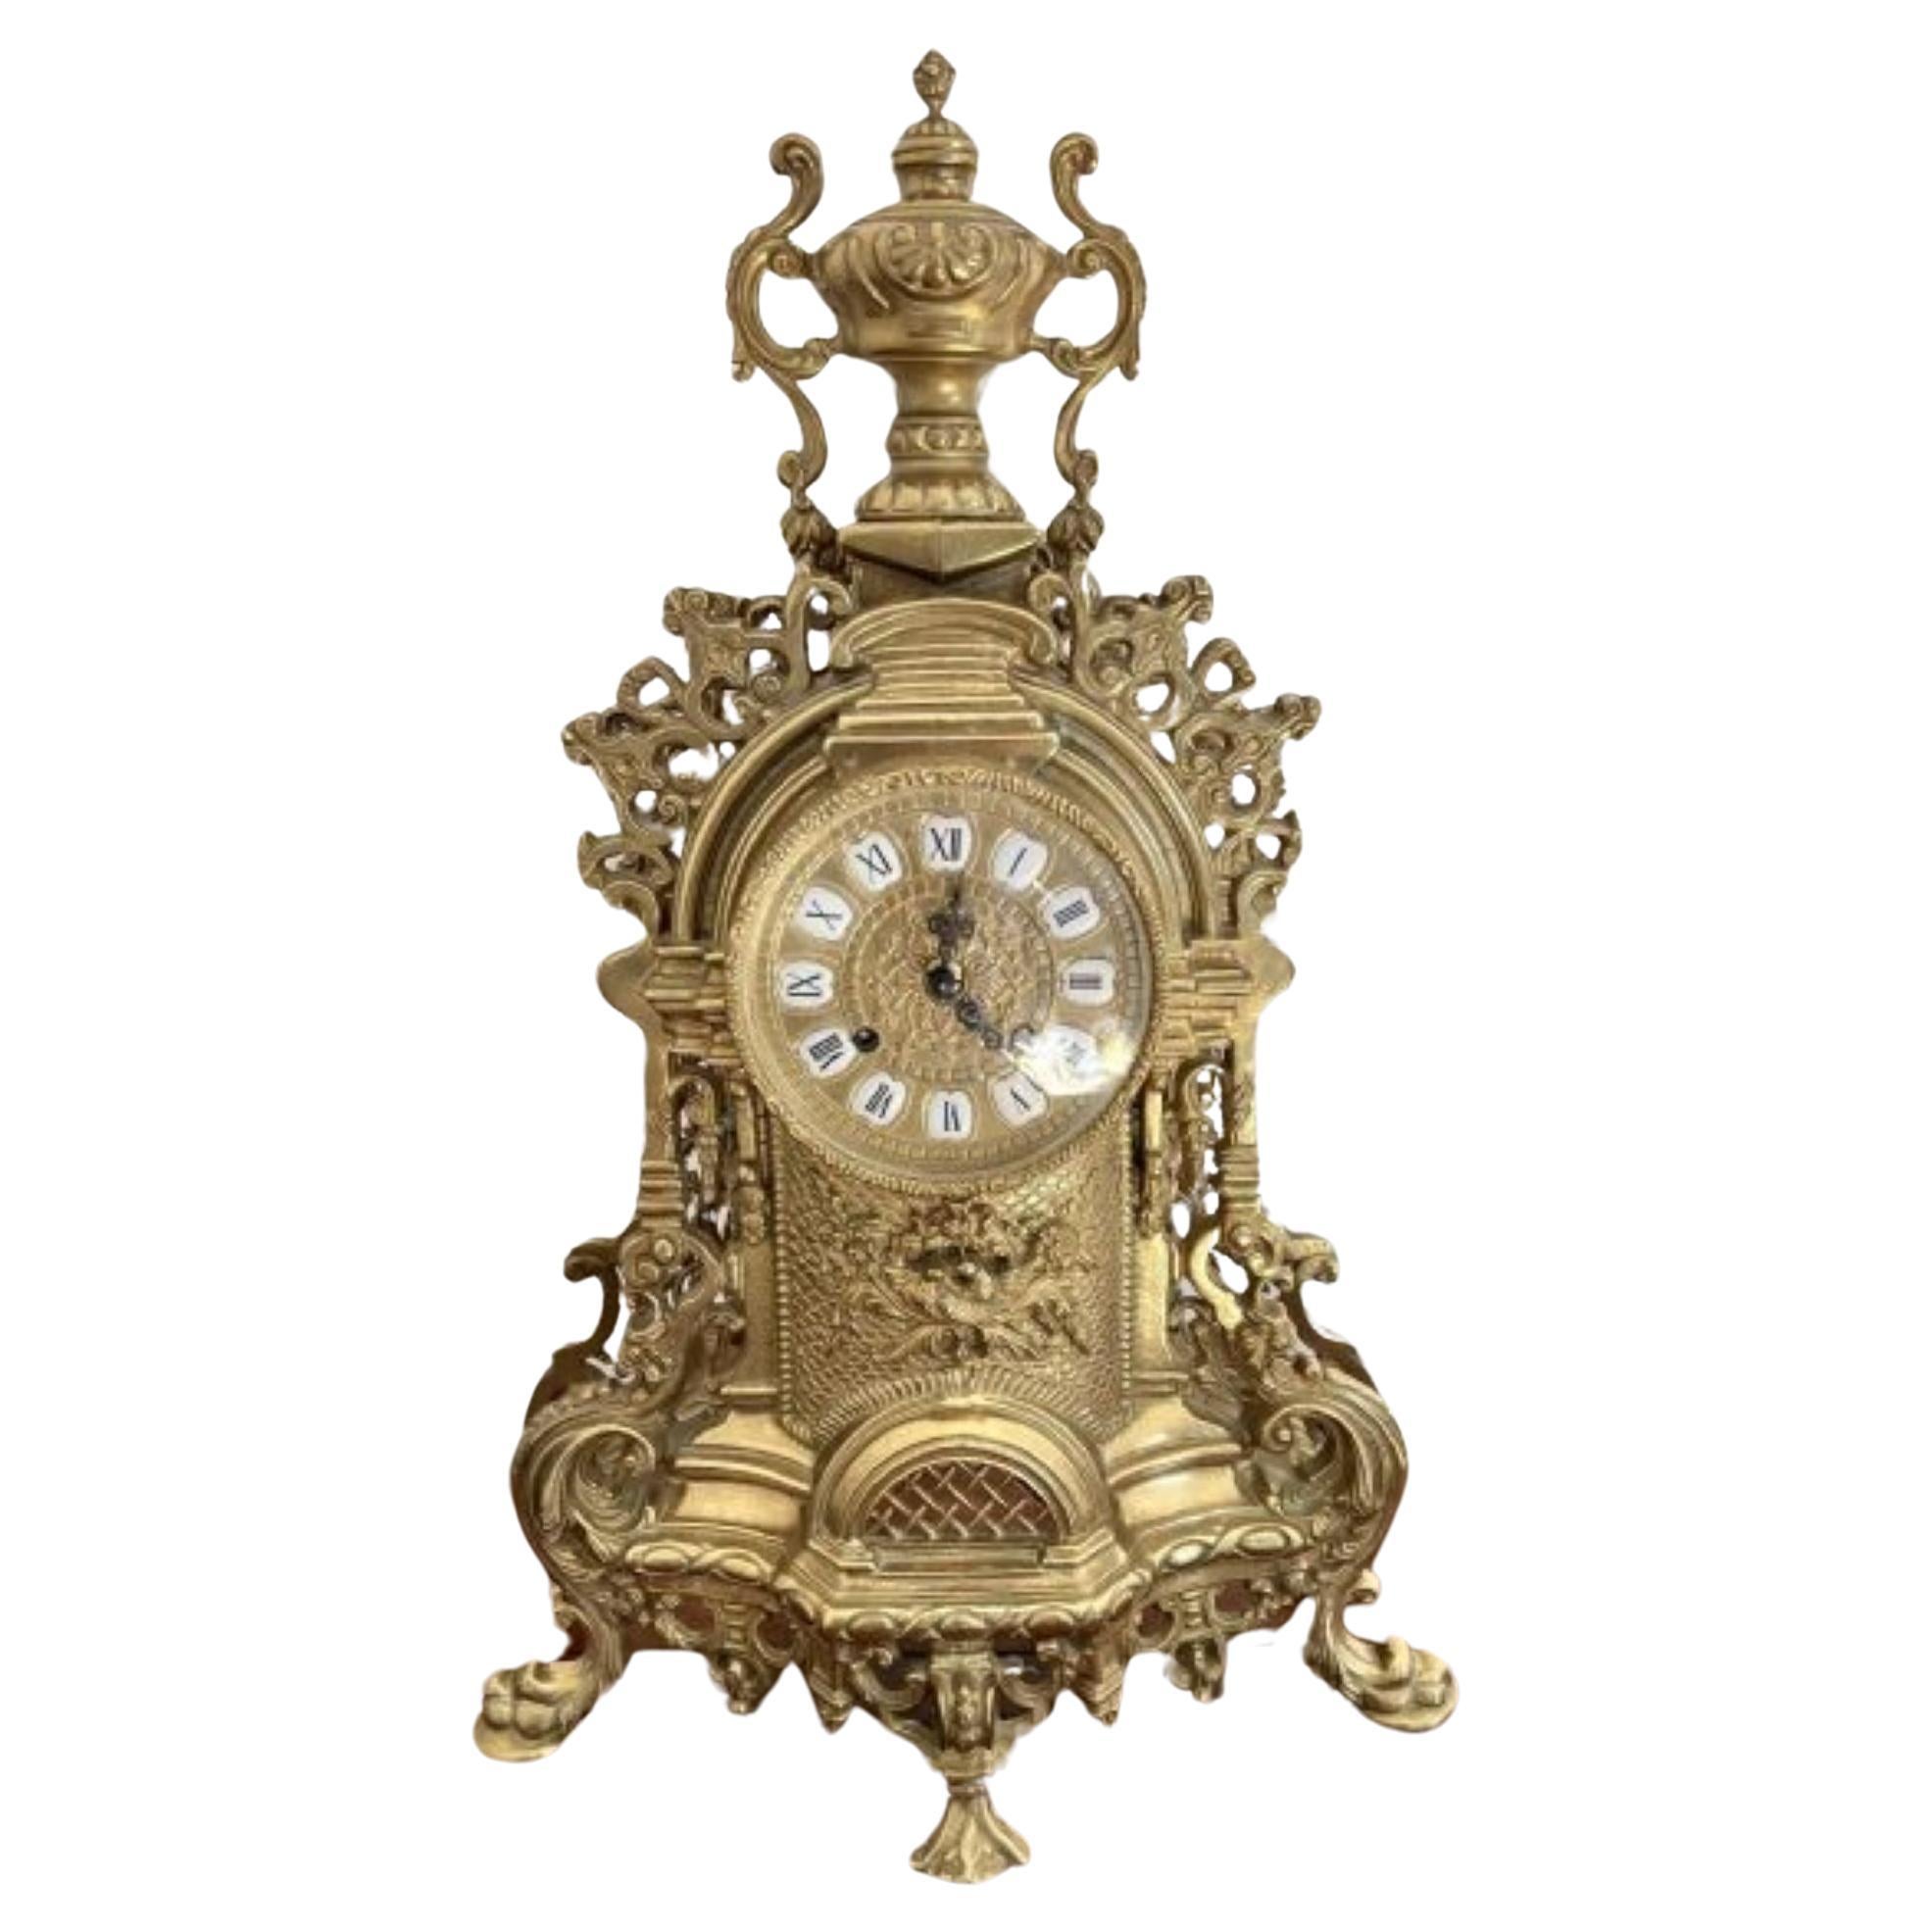 Stunning quality antique Victorian ornate brass mantle clock